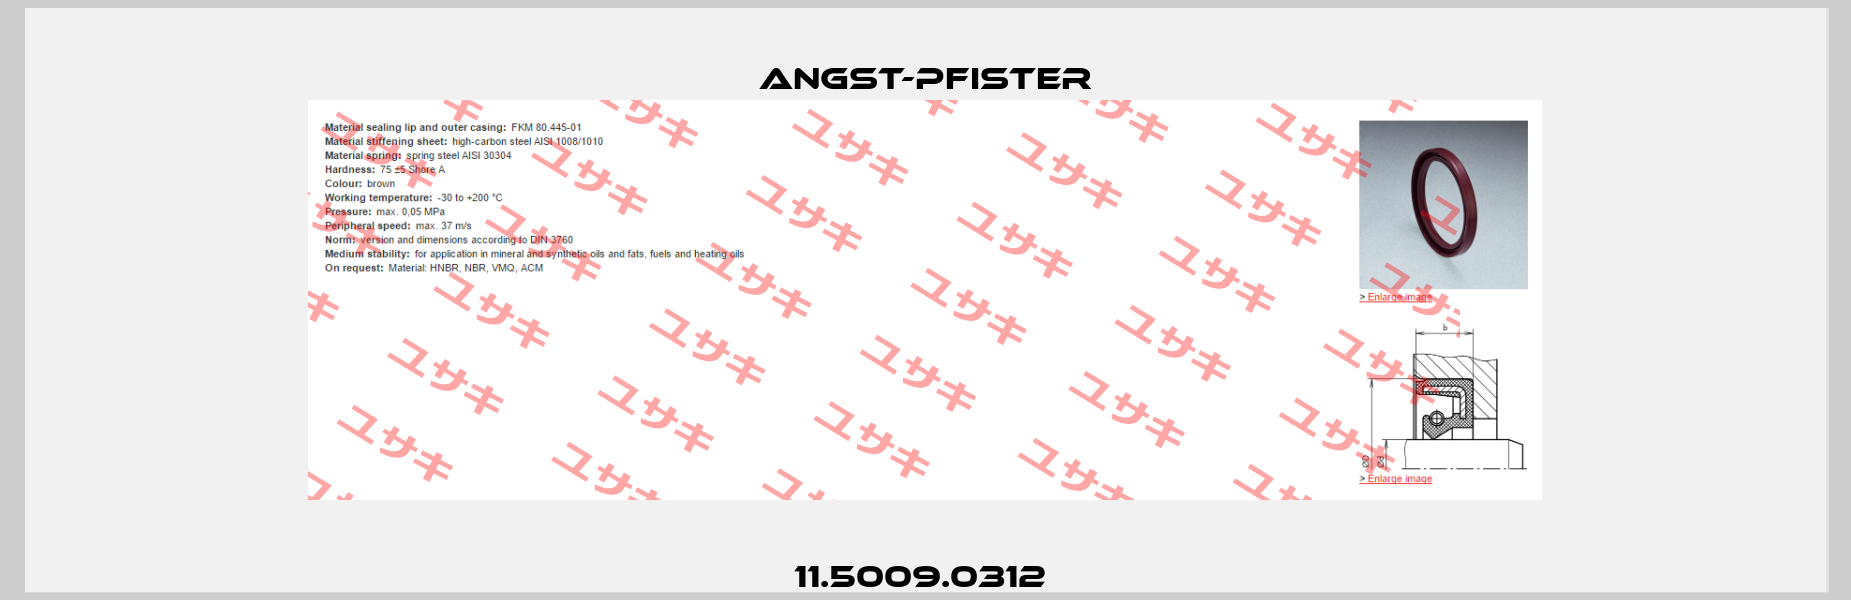 11.5009.0312  Angst-Pfister